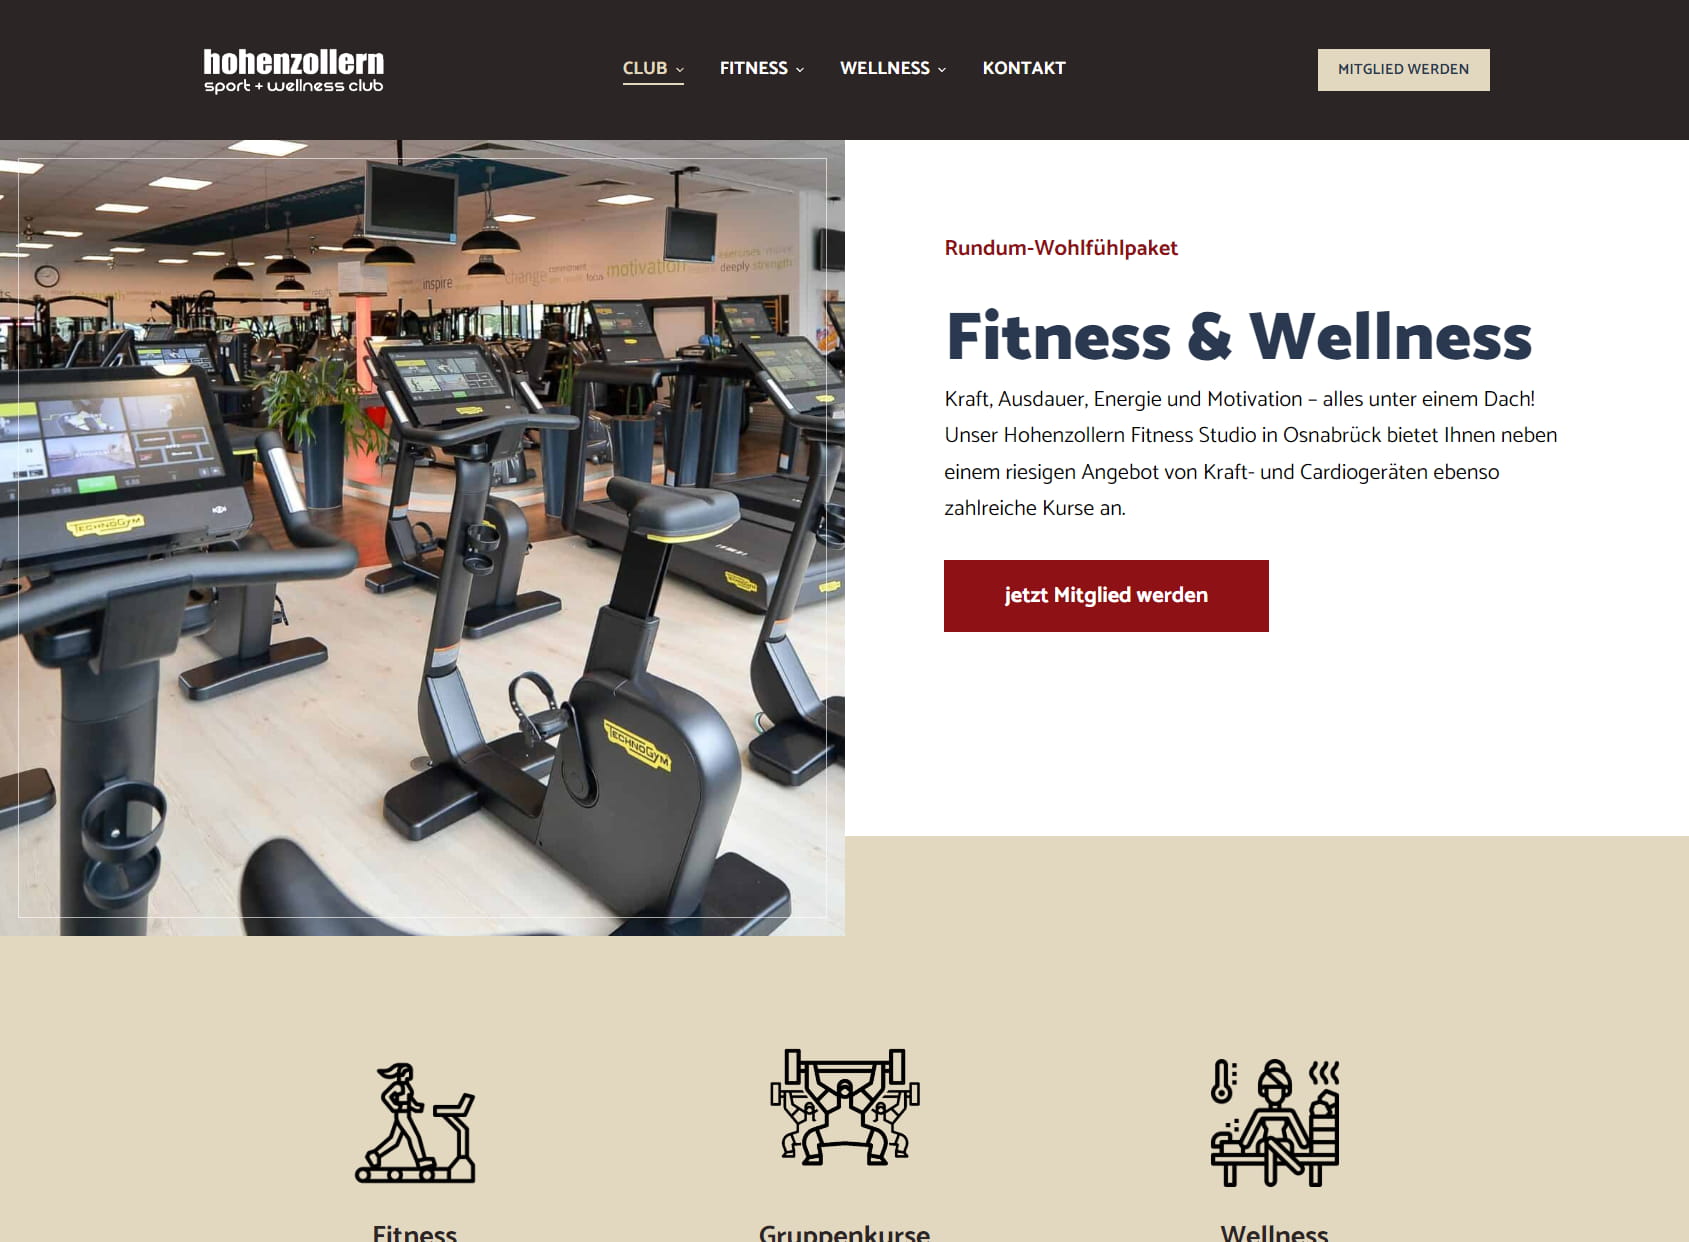 Hohenzollern Sport + Wellness